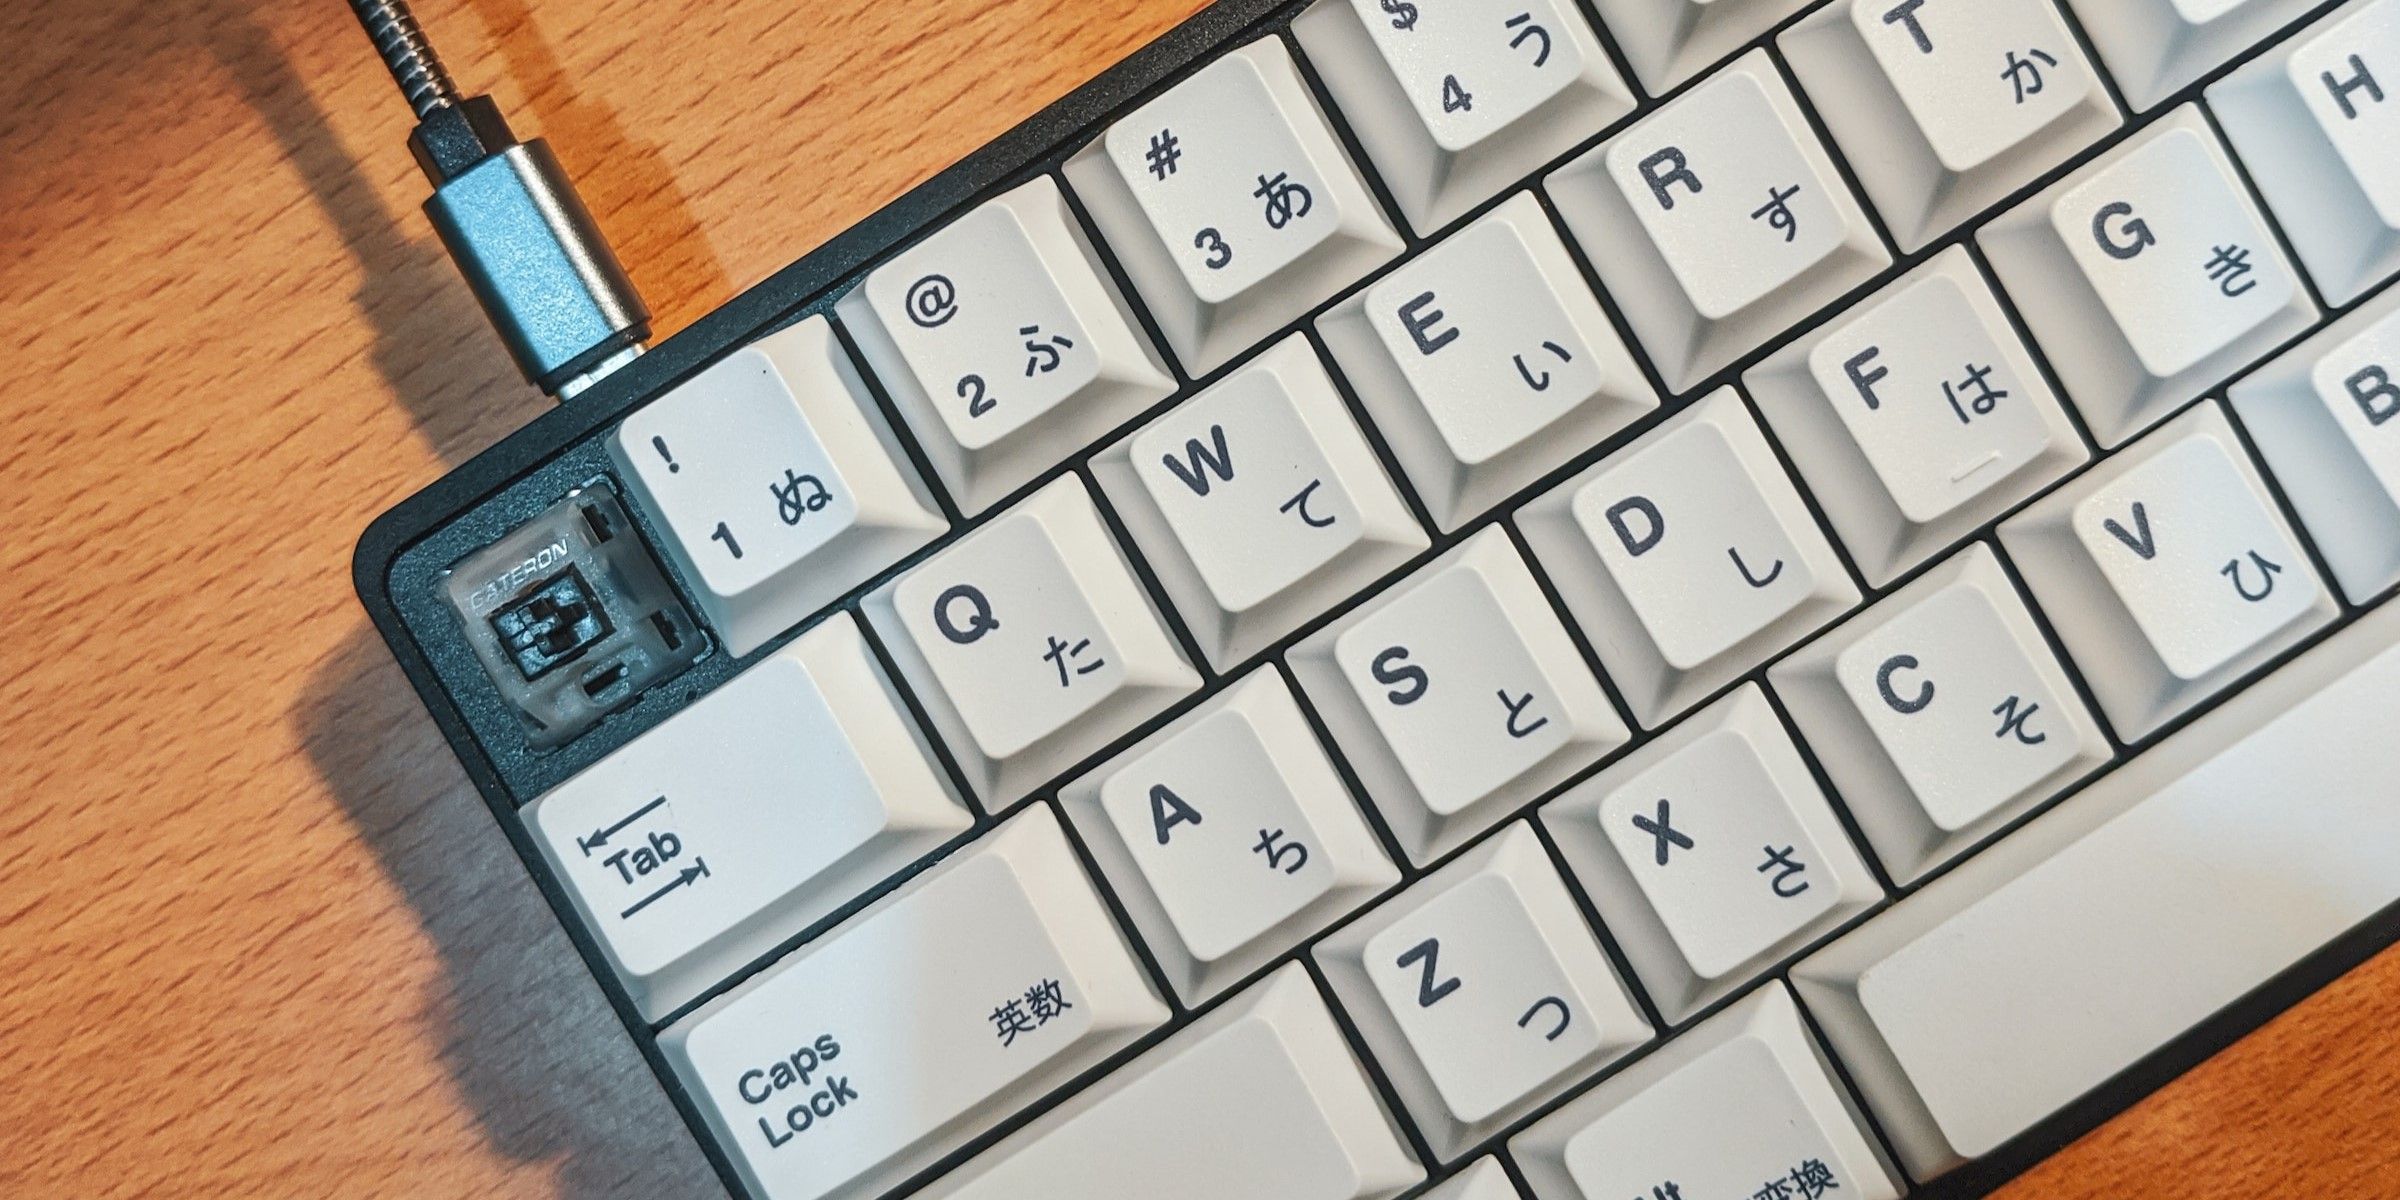 Esc key on a keyboard